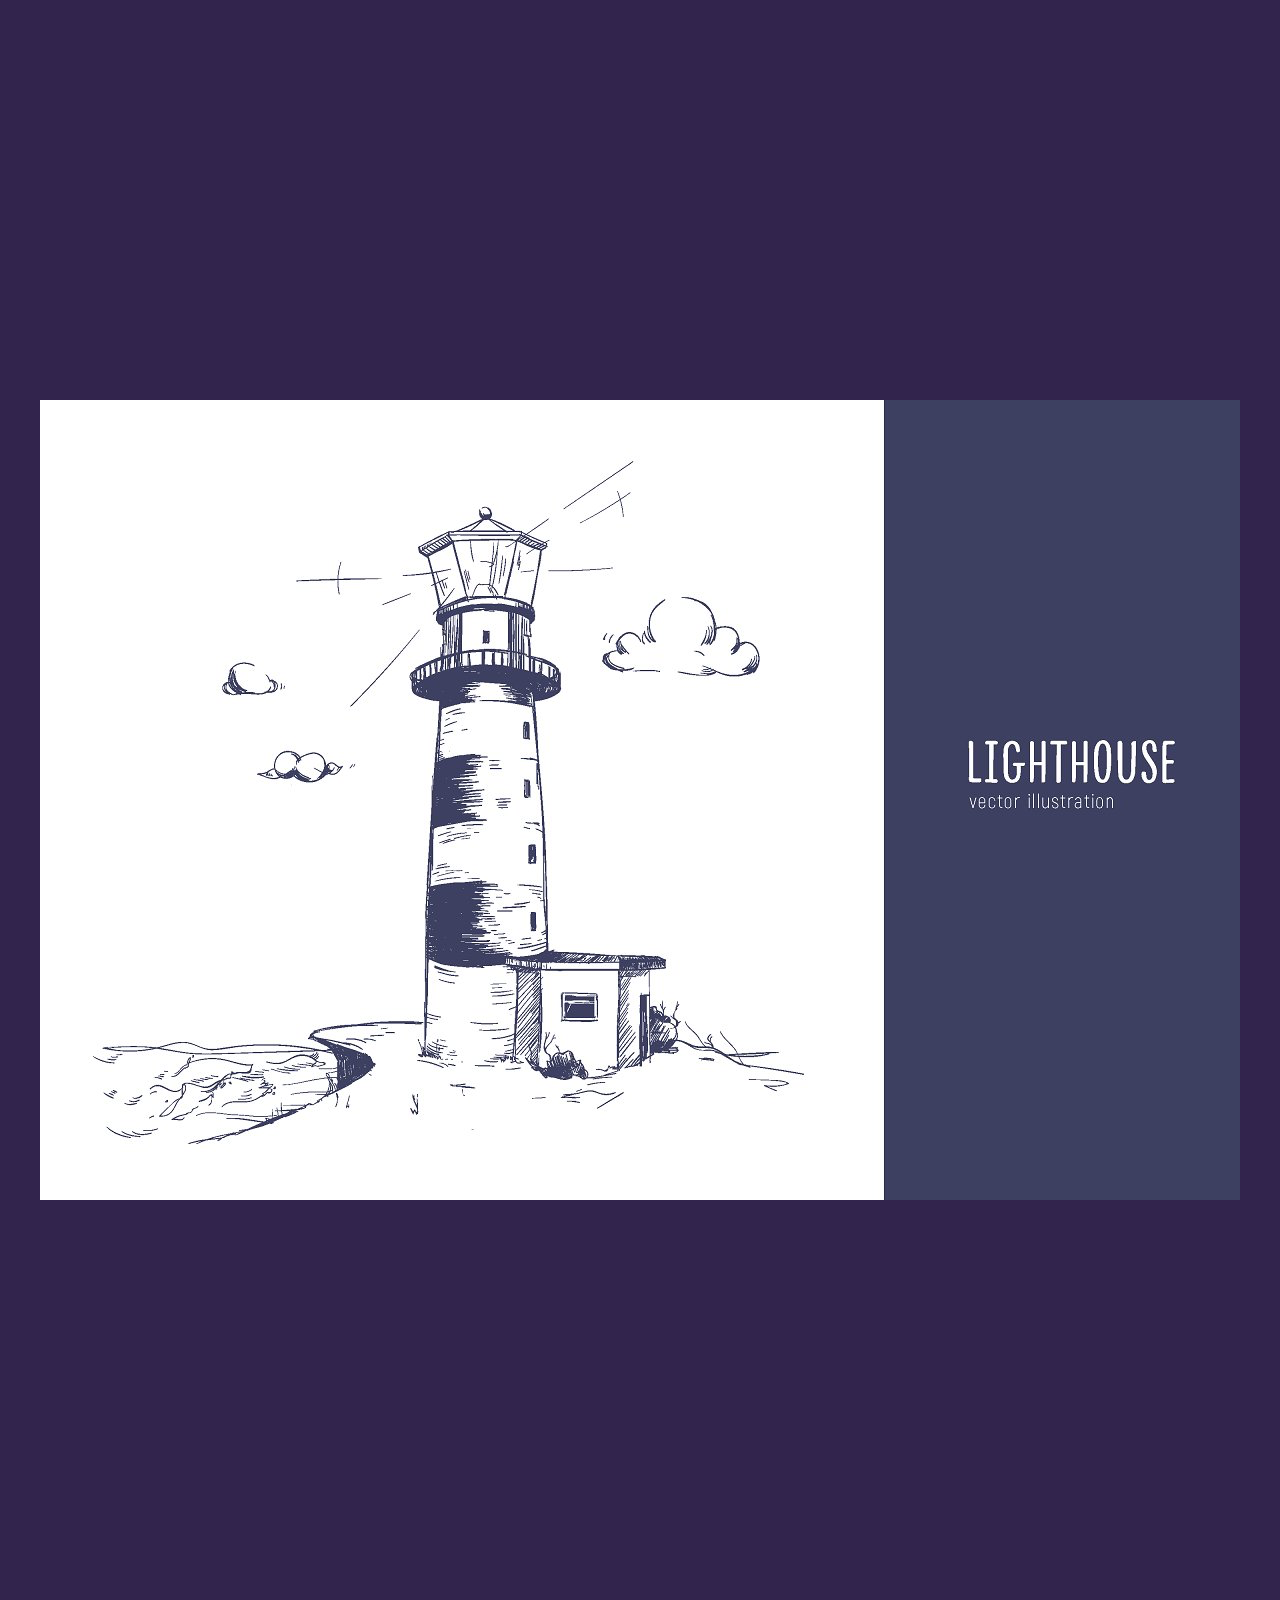 Lighthouse sketch illustration pinterest image preview.